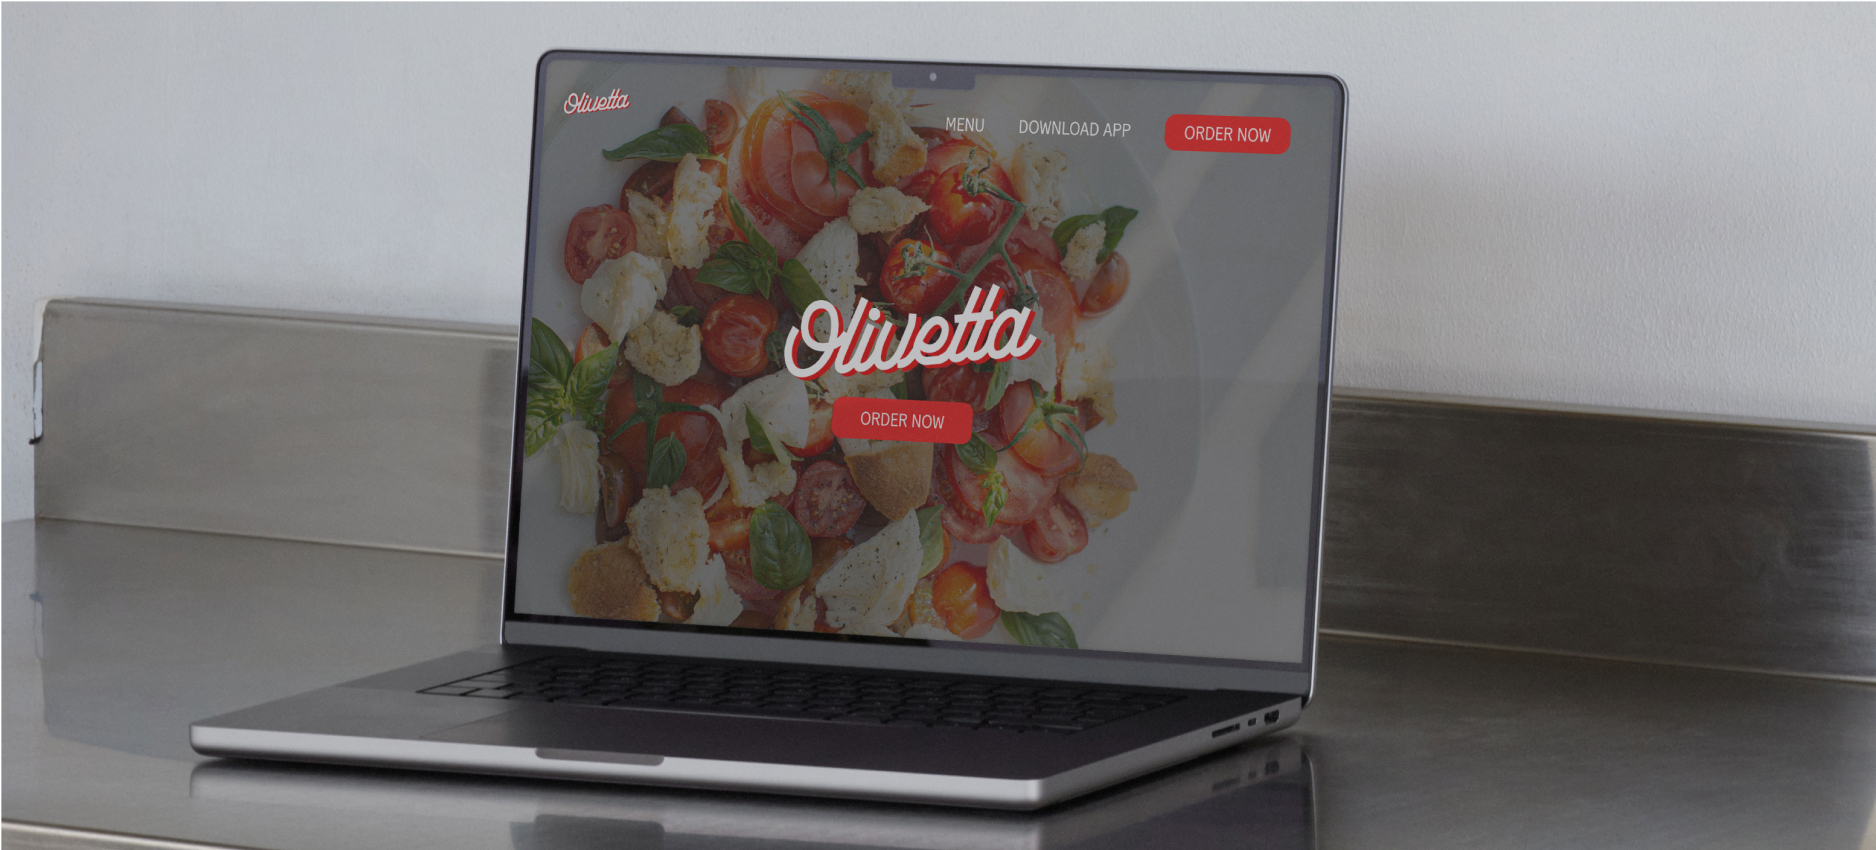 Example of restaurant website optimized for online ordering